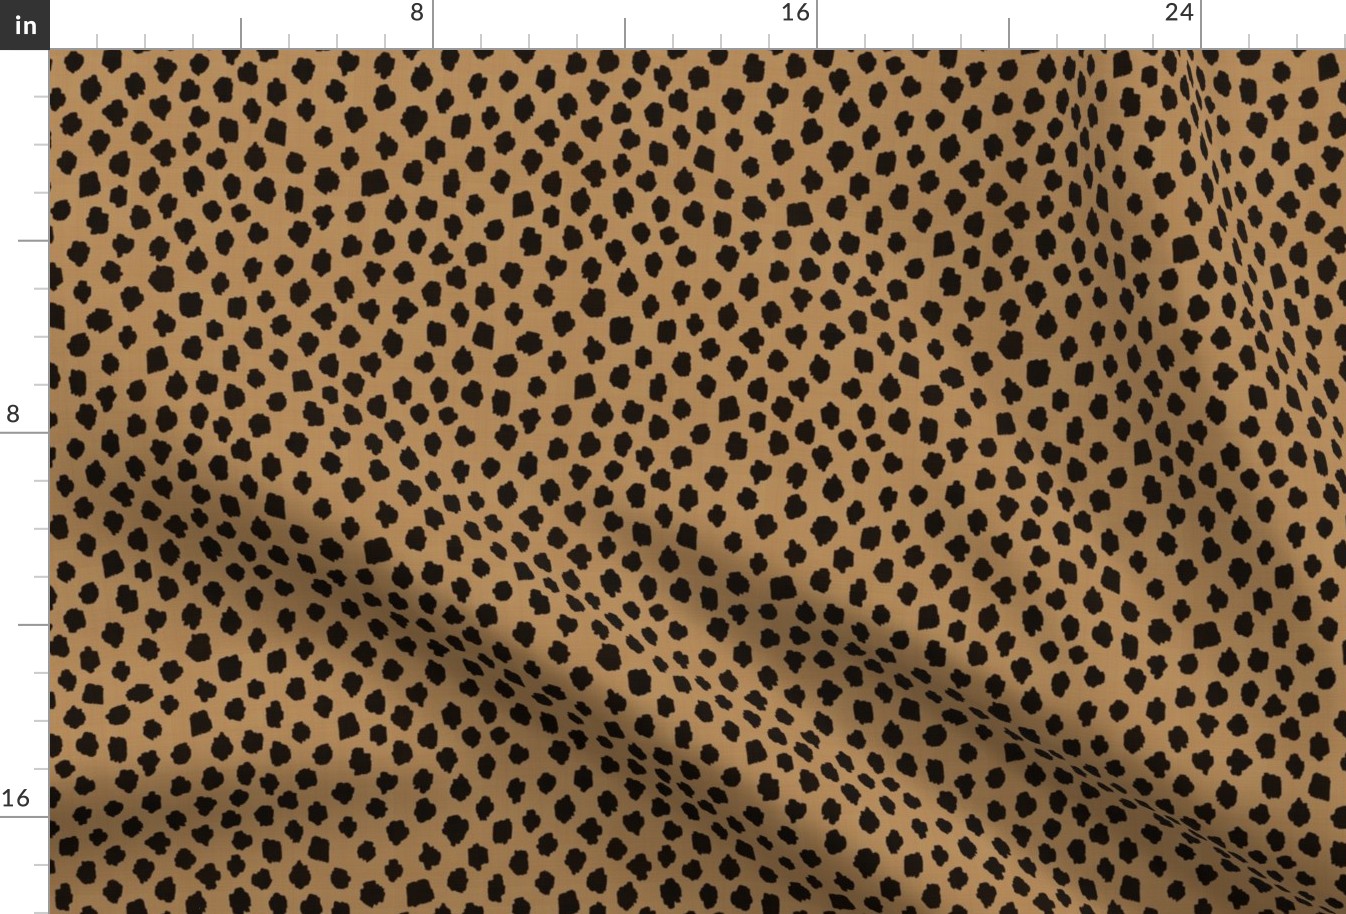 Custom cheetah  spots small